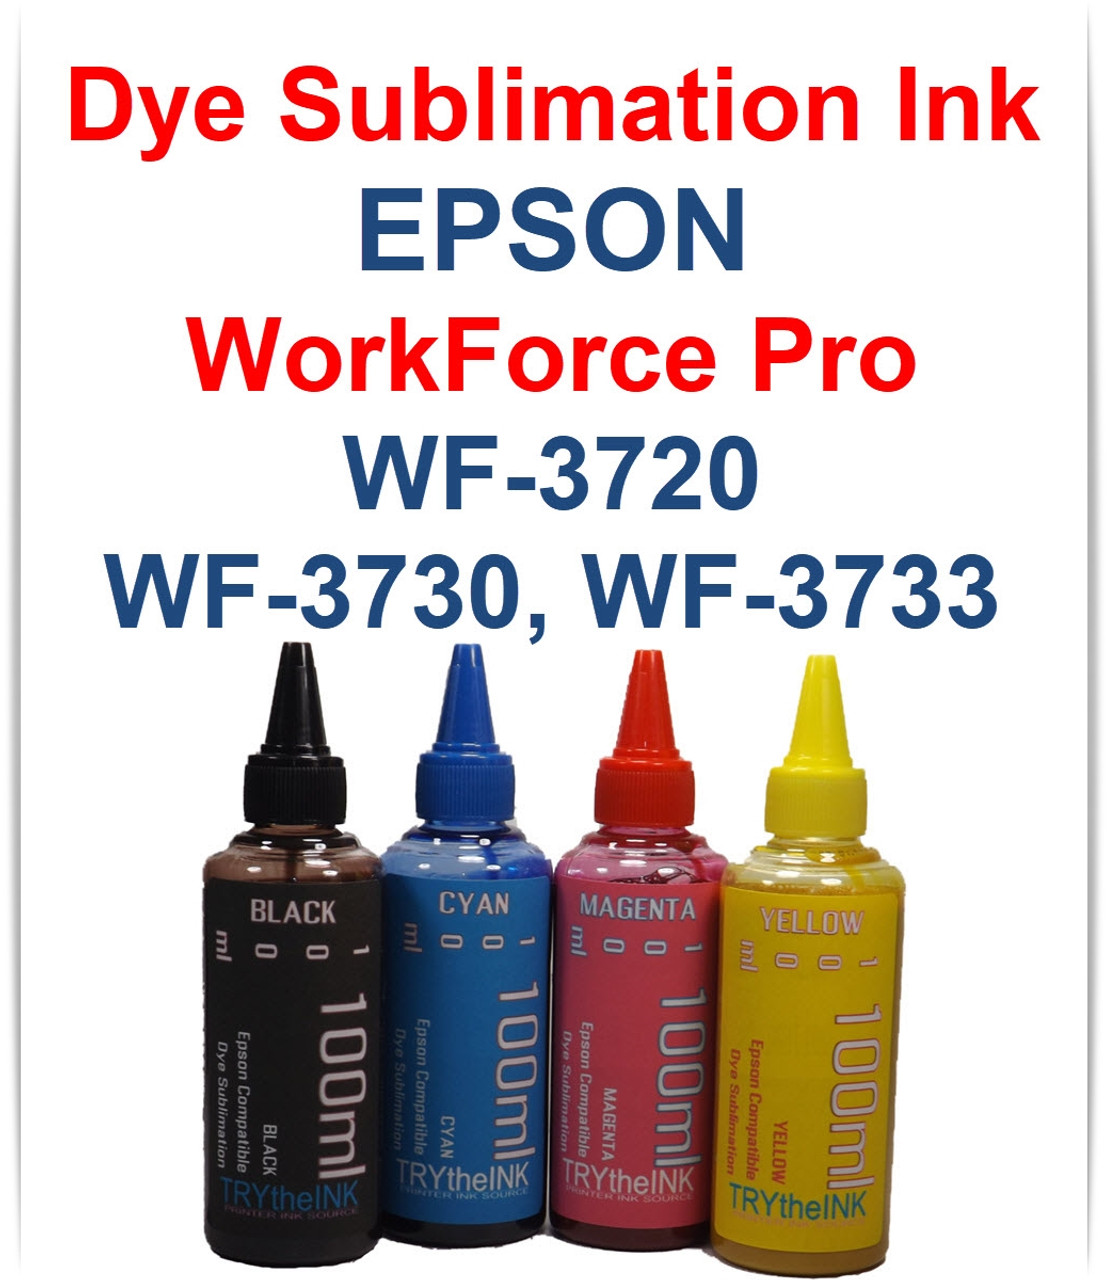 4- 100ml bottles Dye Sublimation Ink for Epson WorkForce Pro WF-3720 WF-3730 WF-3733 Printers